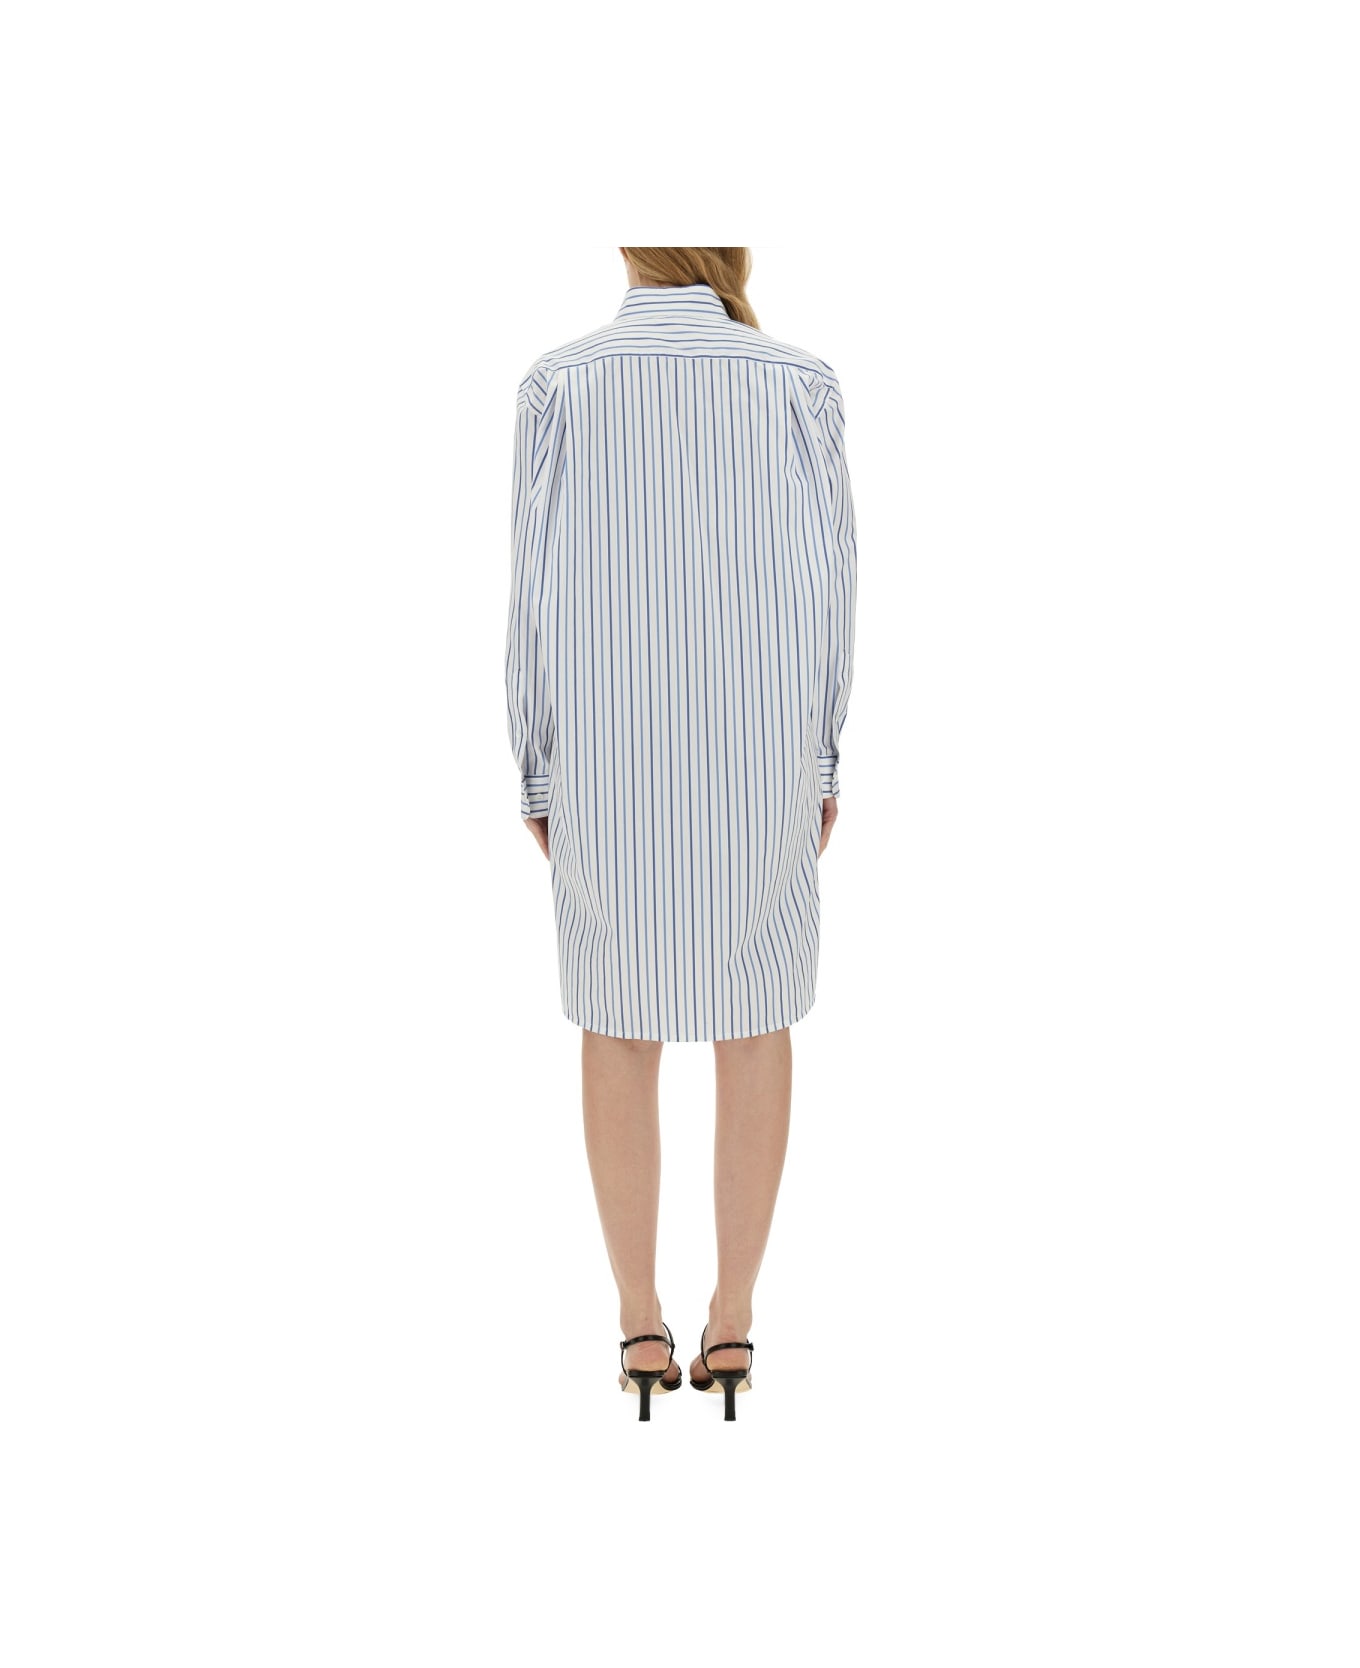 Dries Van Noten Shirt With Stripe Pattern - MULTICOLOUR シャツ